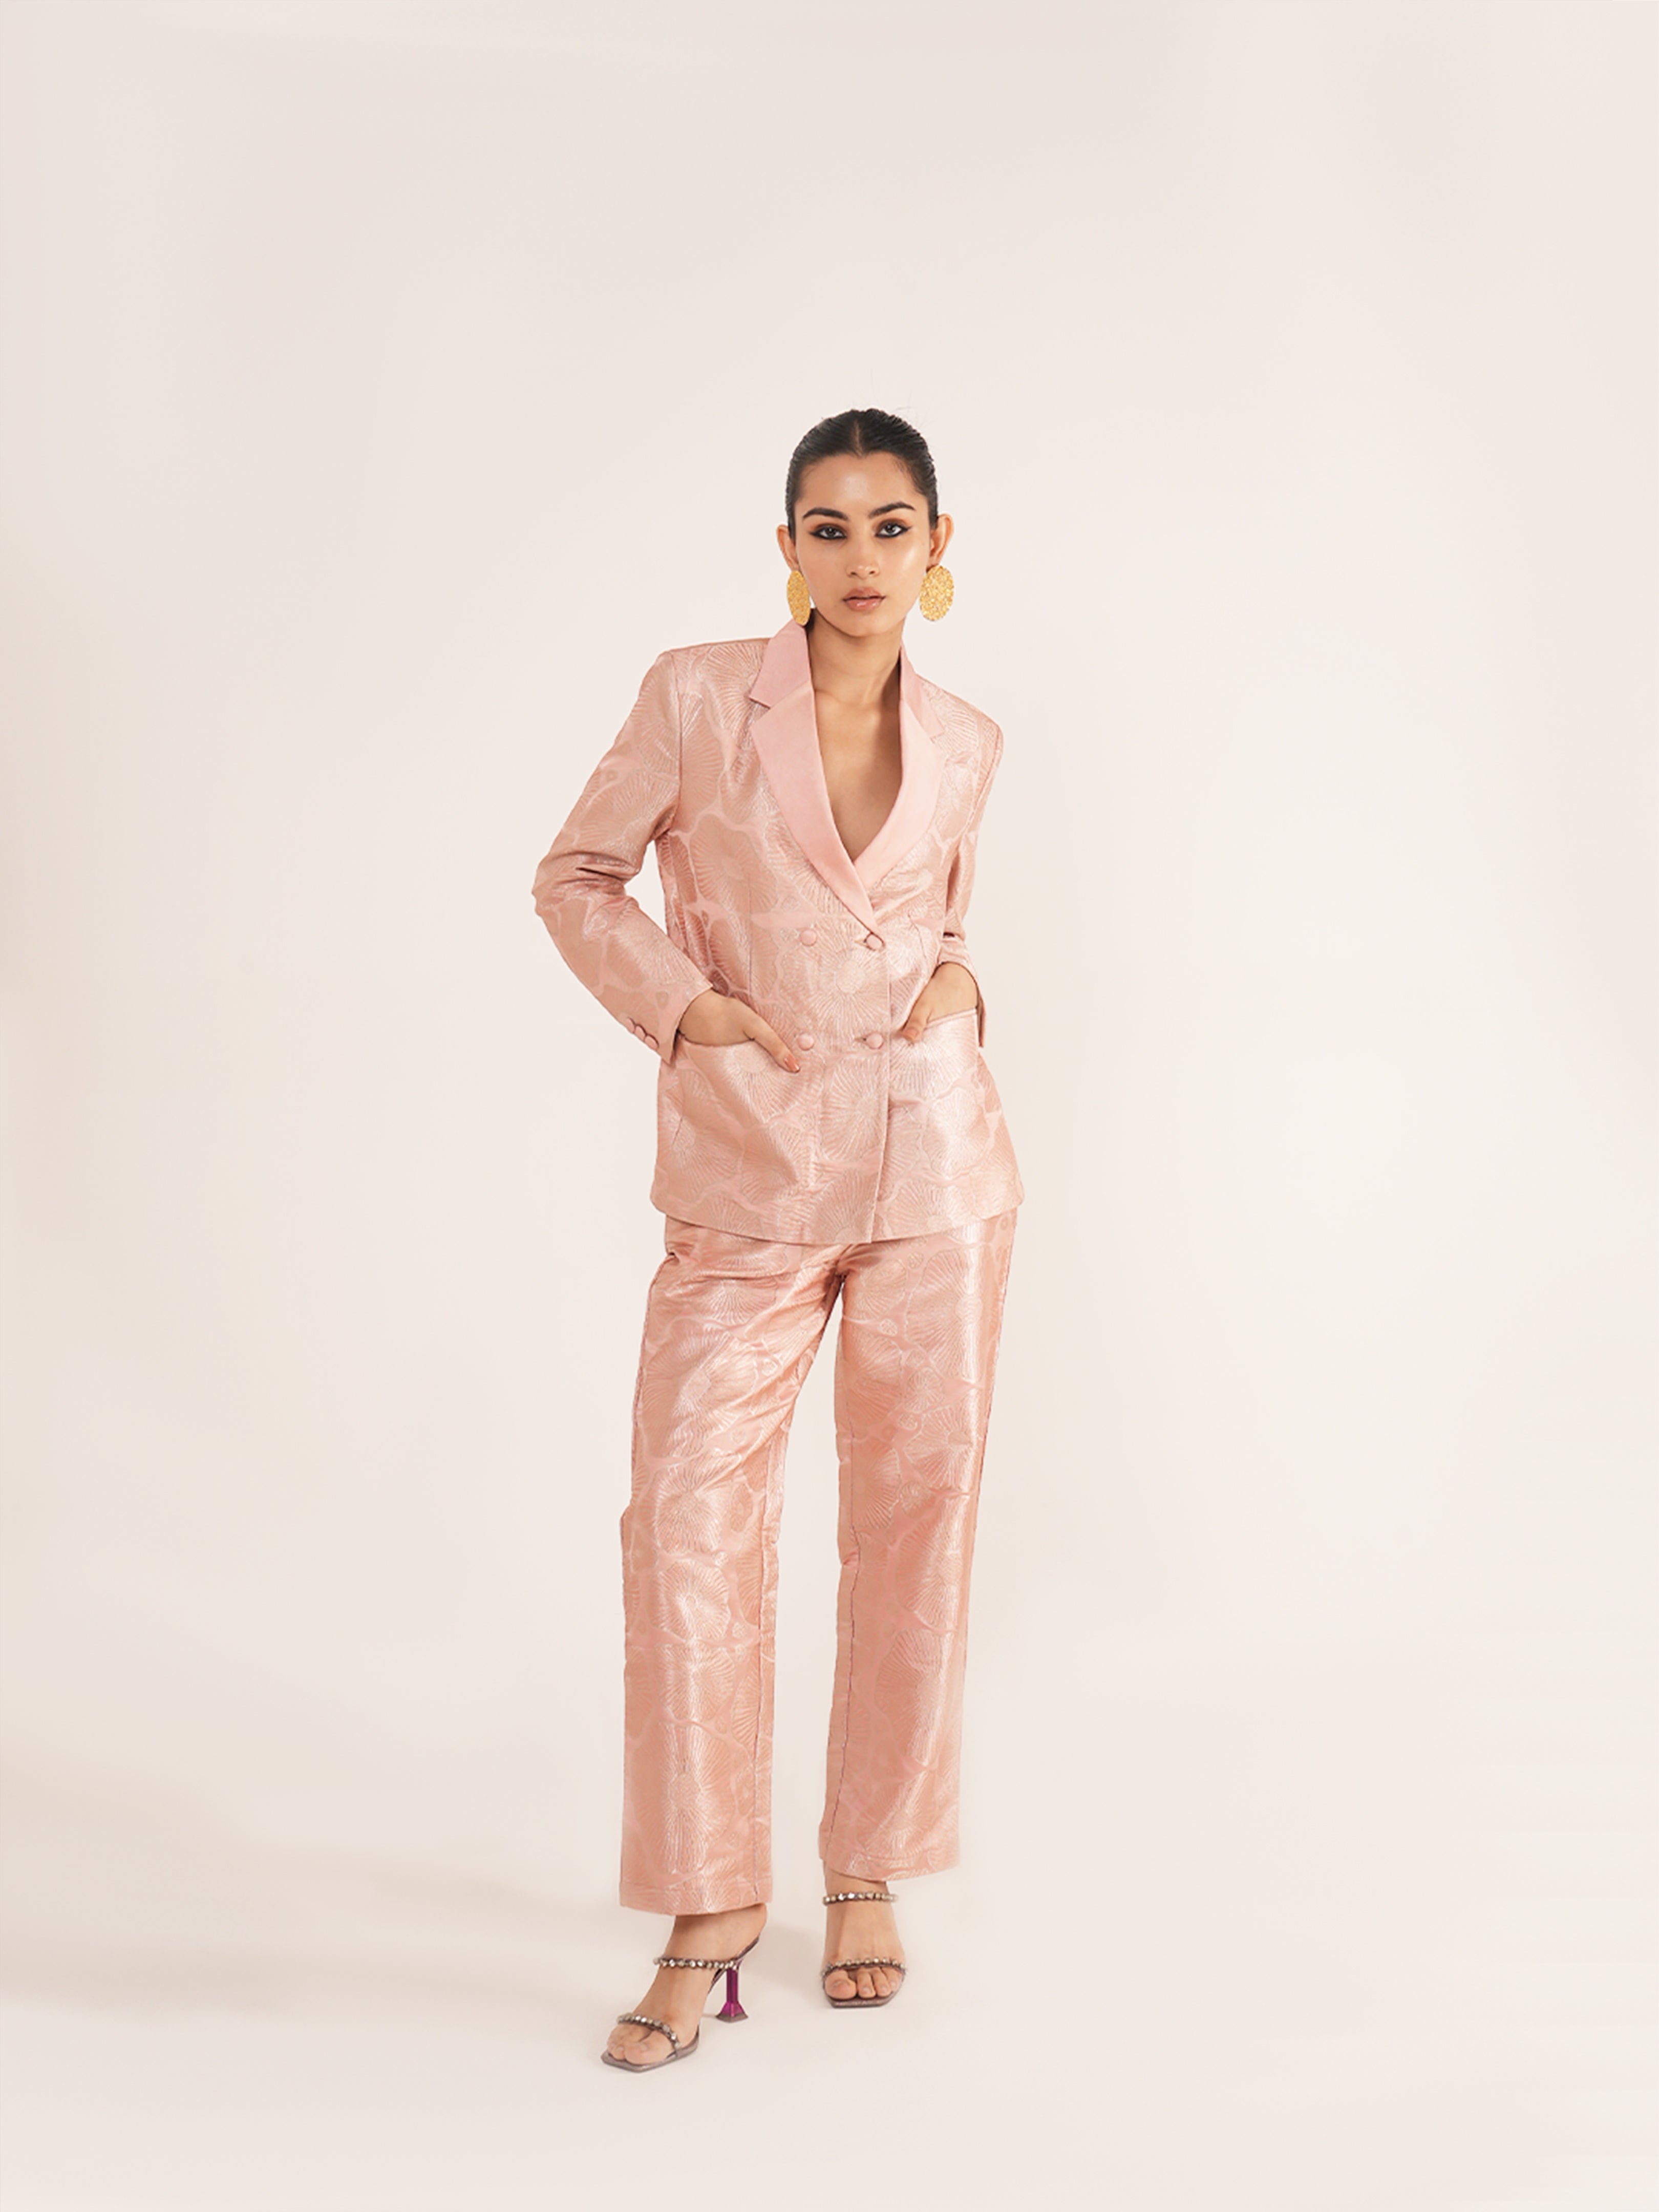 Kaizen Silk Pant Suit In Baby Pink